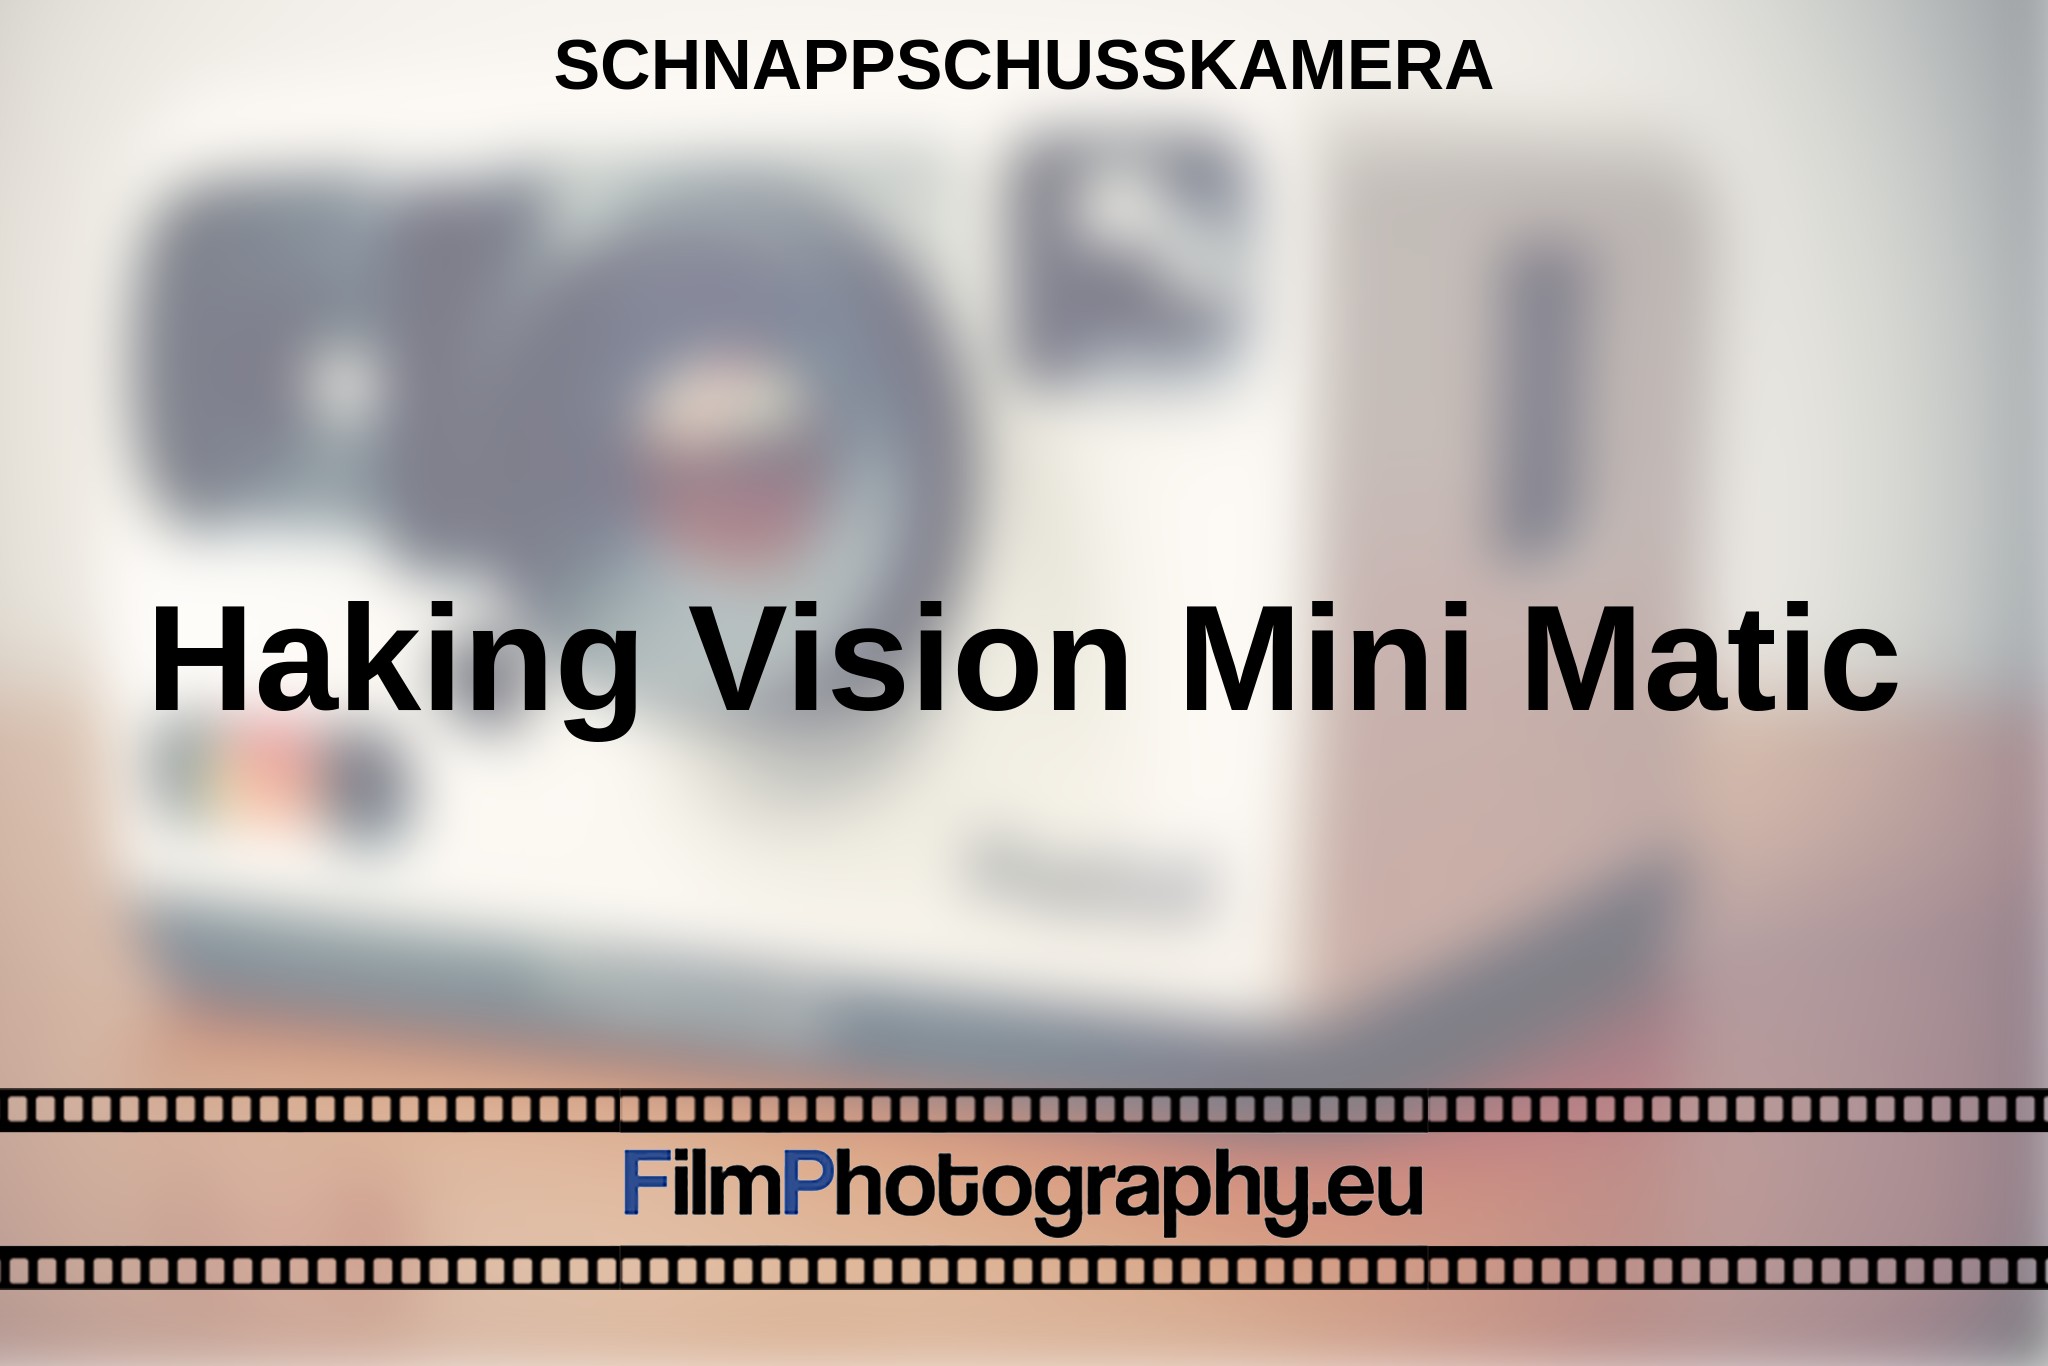 haking-vision-mini-matic-schnappschusskamera-bnv.jpg